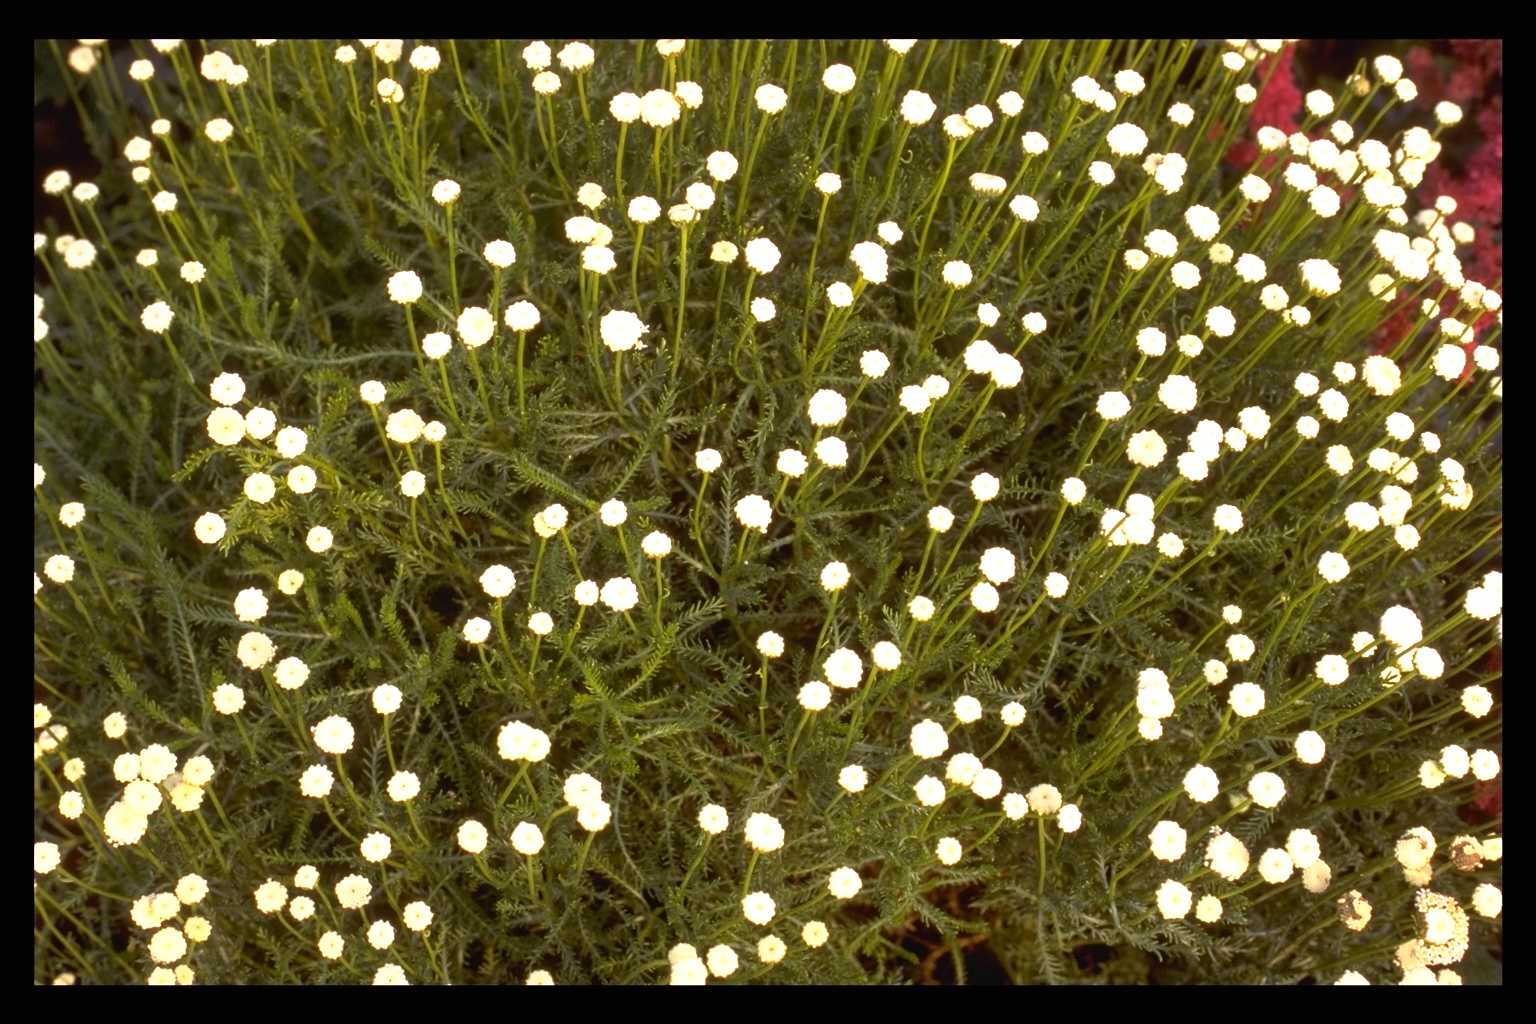 Santolina chamaecyparissus var. lindavica